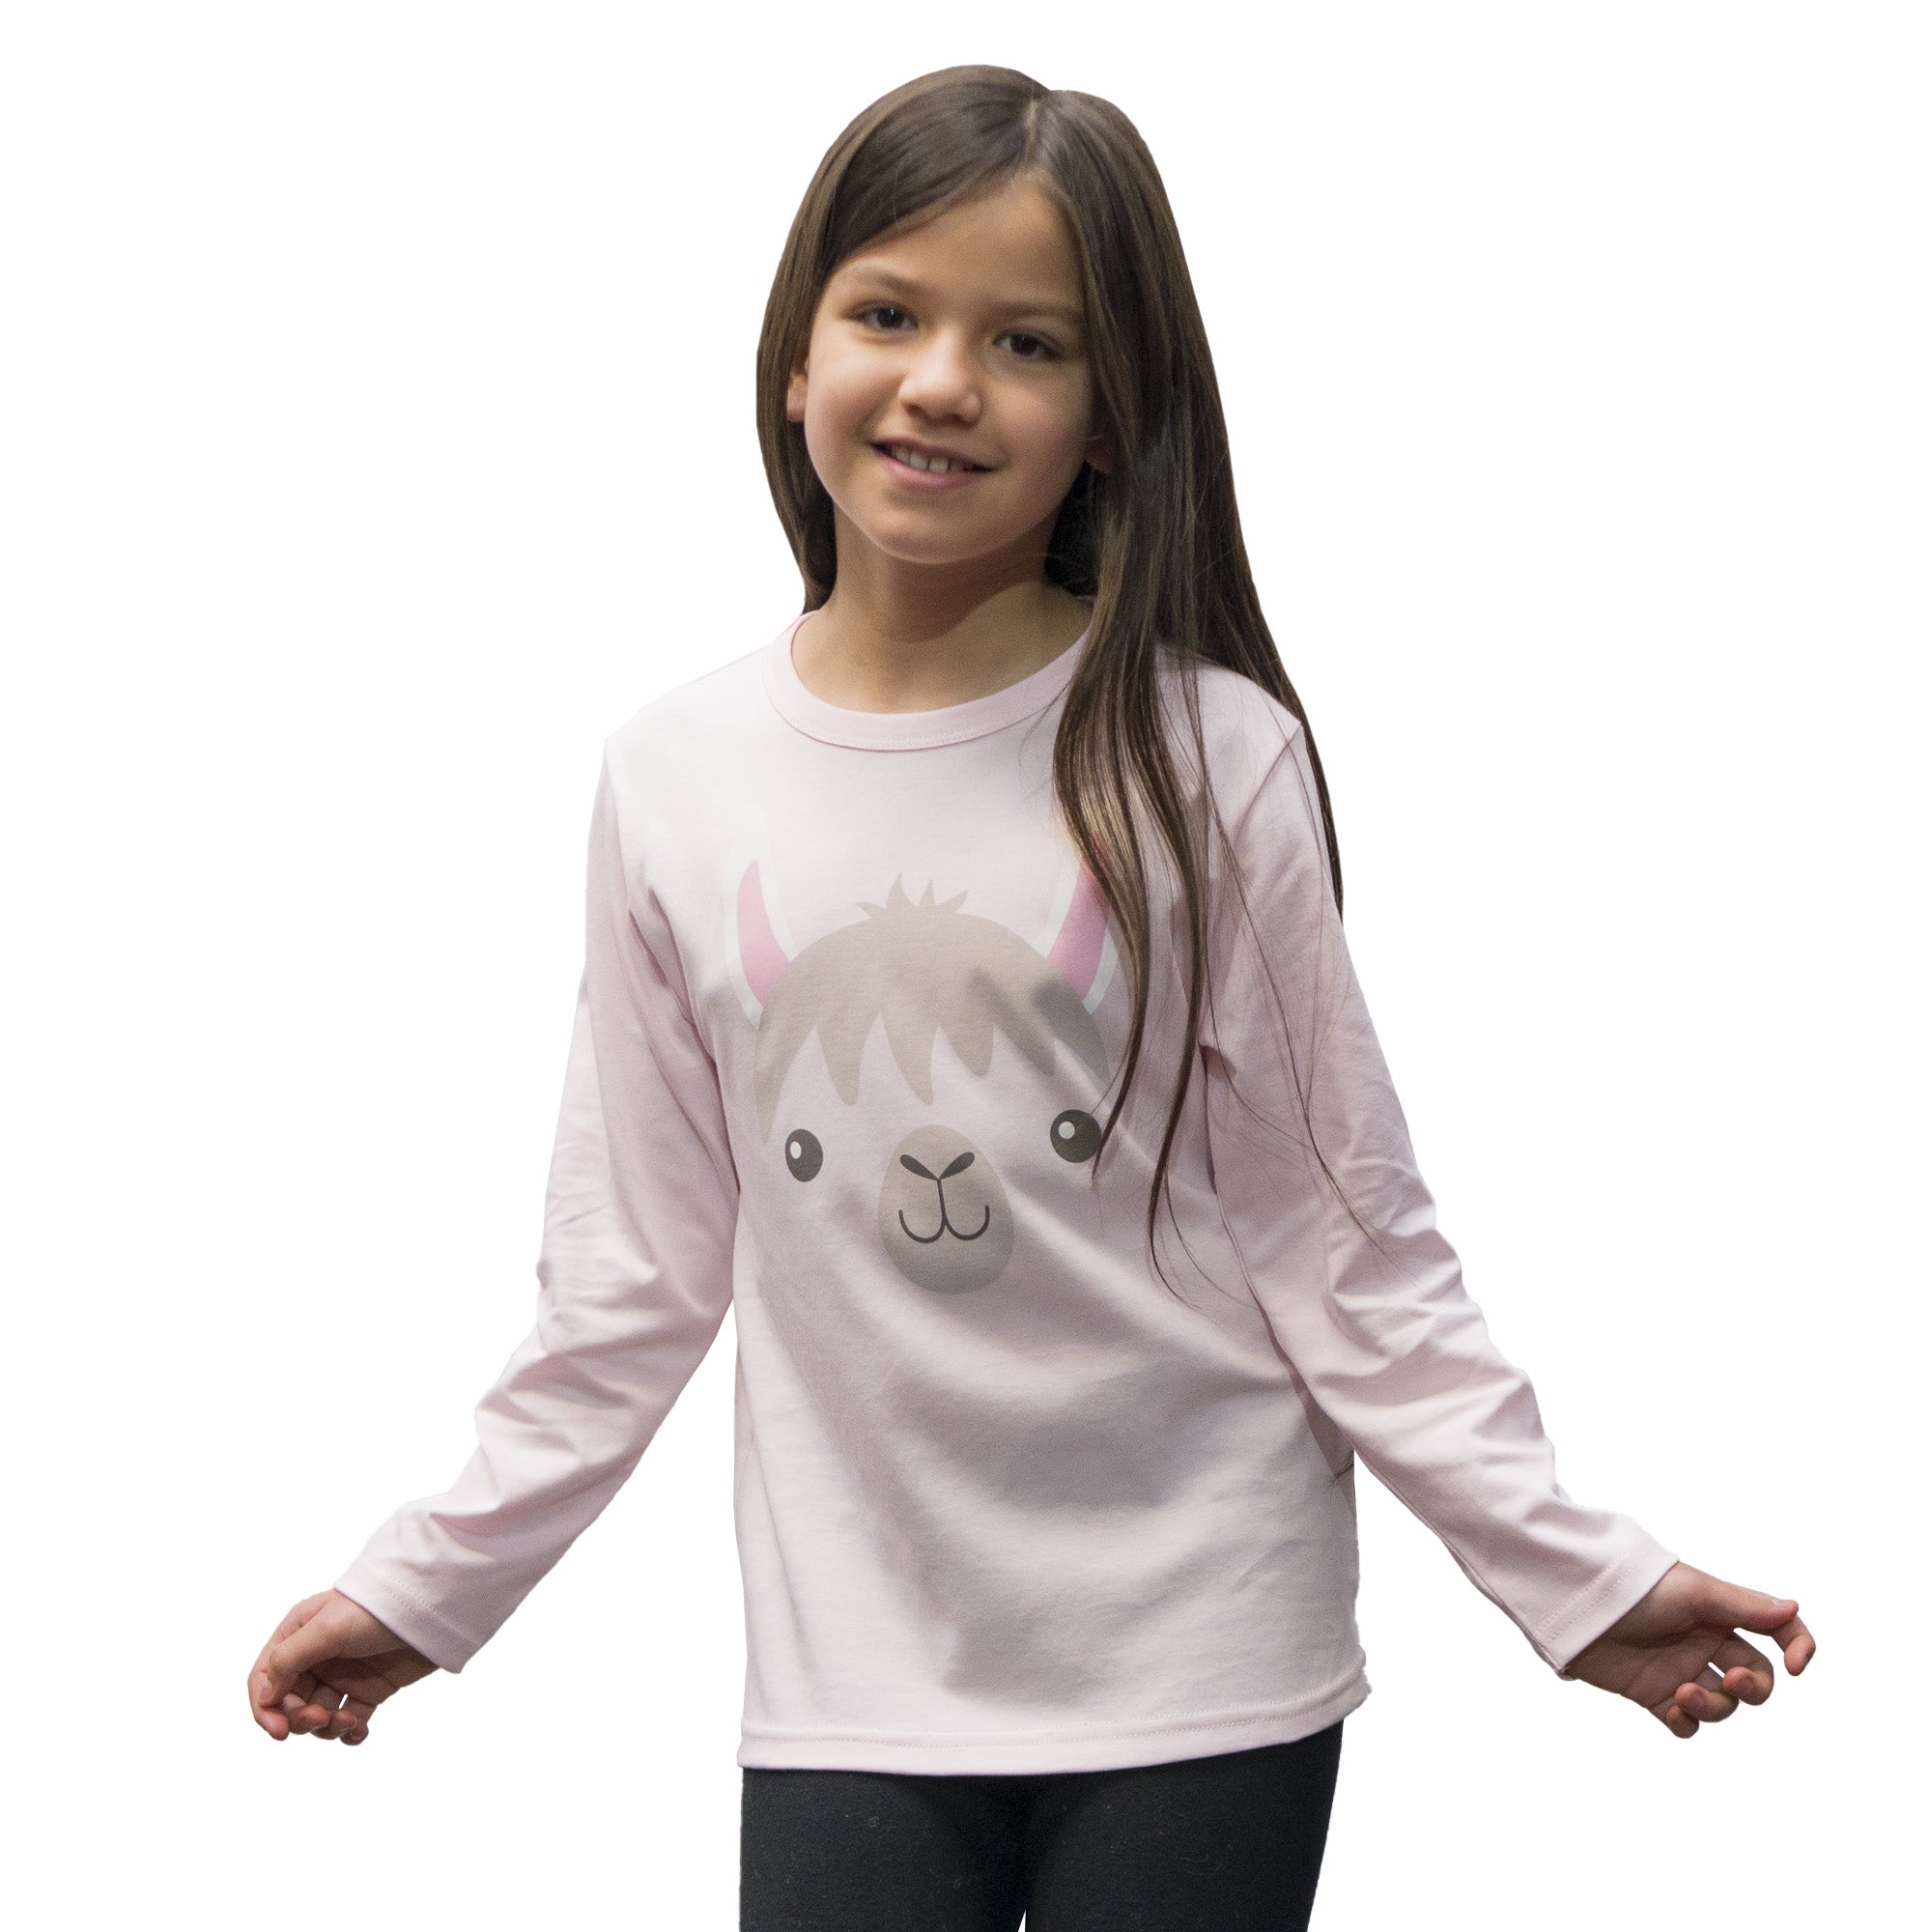 100 % Cotton Children long sleeve shirts, large Alpaca logo, by INKITA